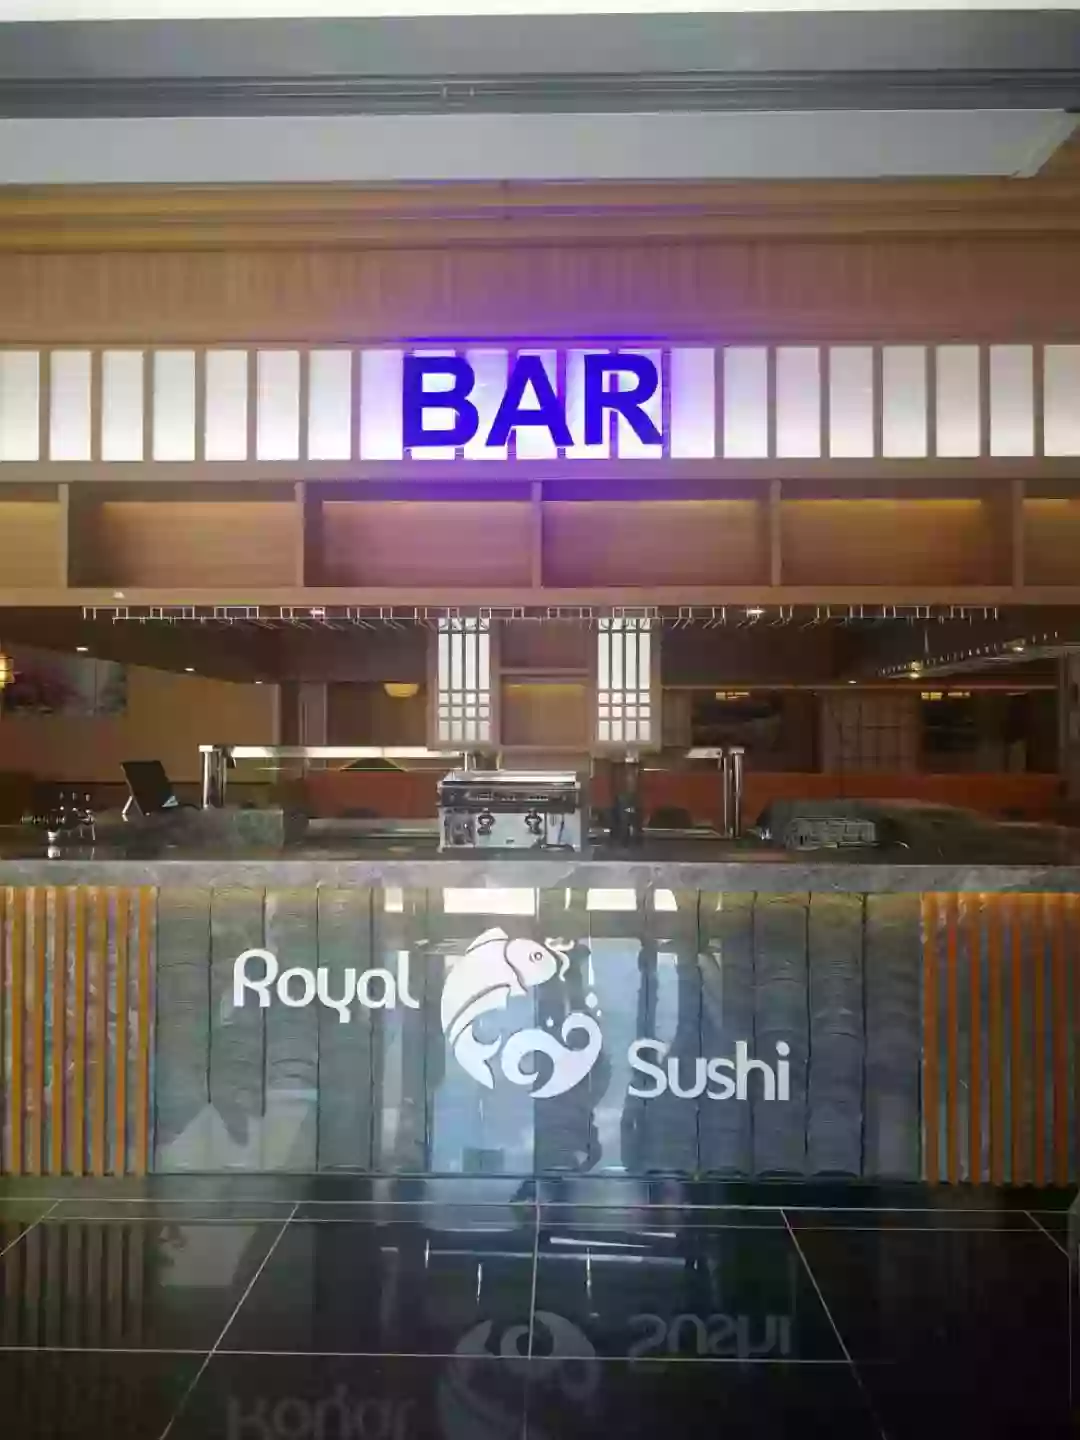 Royal Sushi